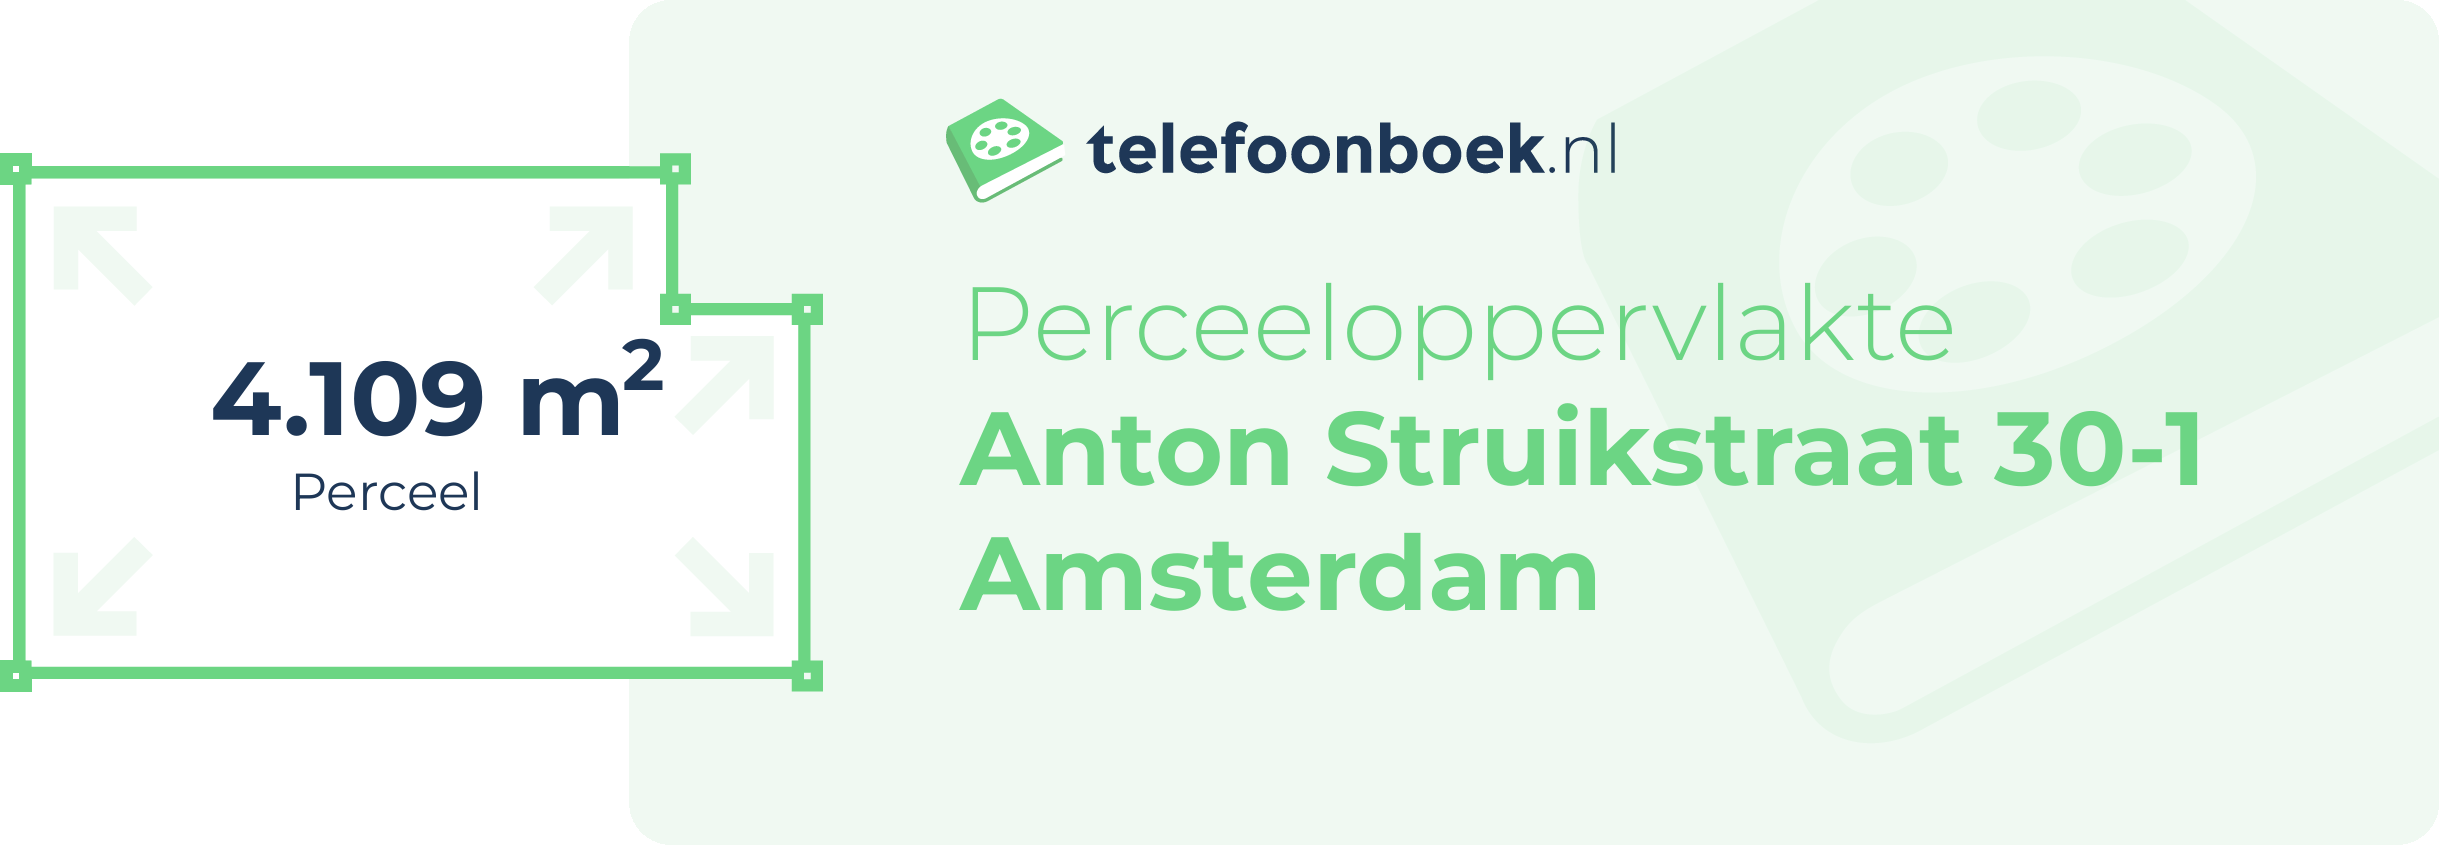 Perceeloppervlakte Anton Struikstraat 30-1 Amsterdam